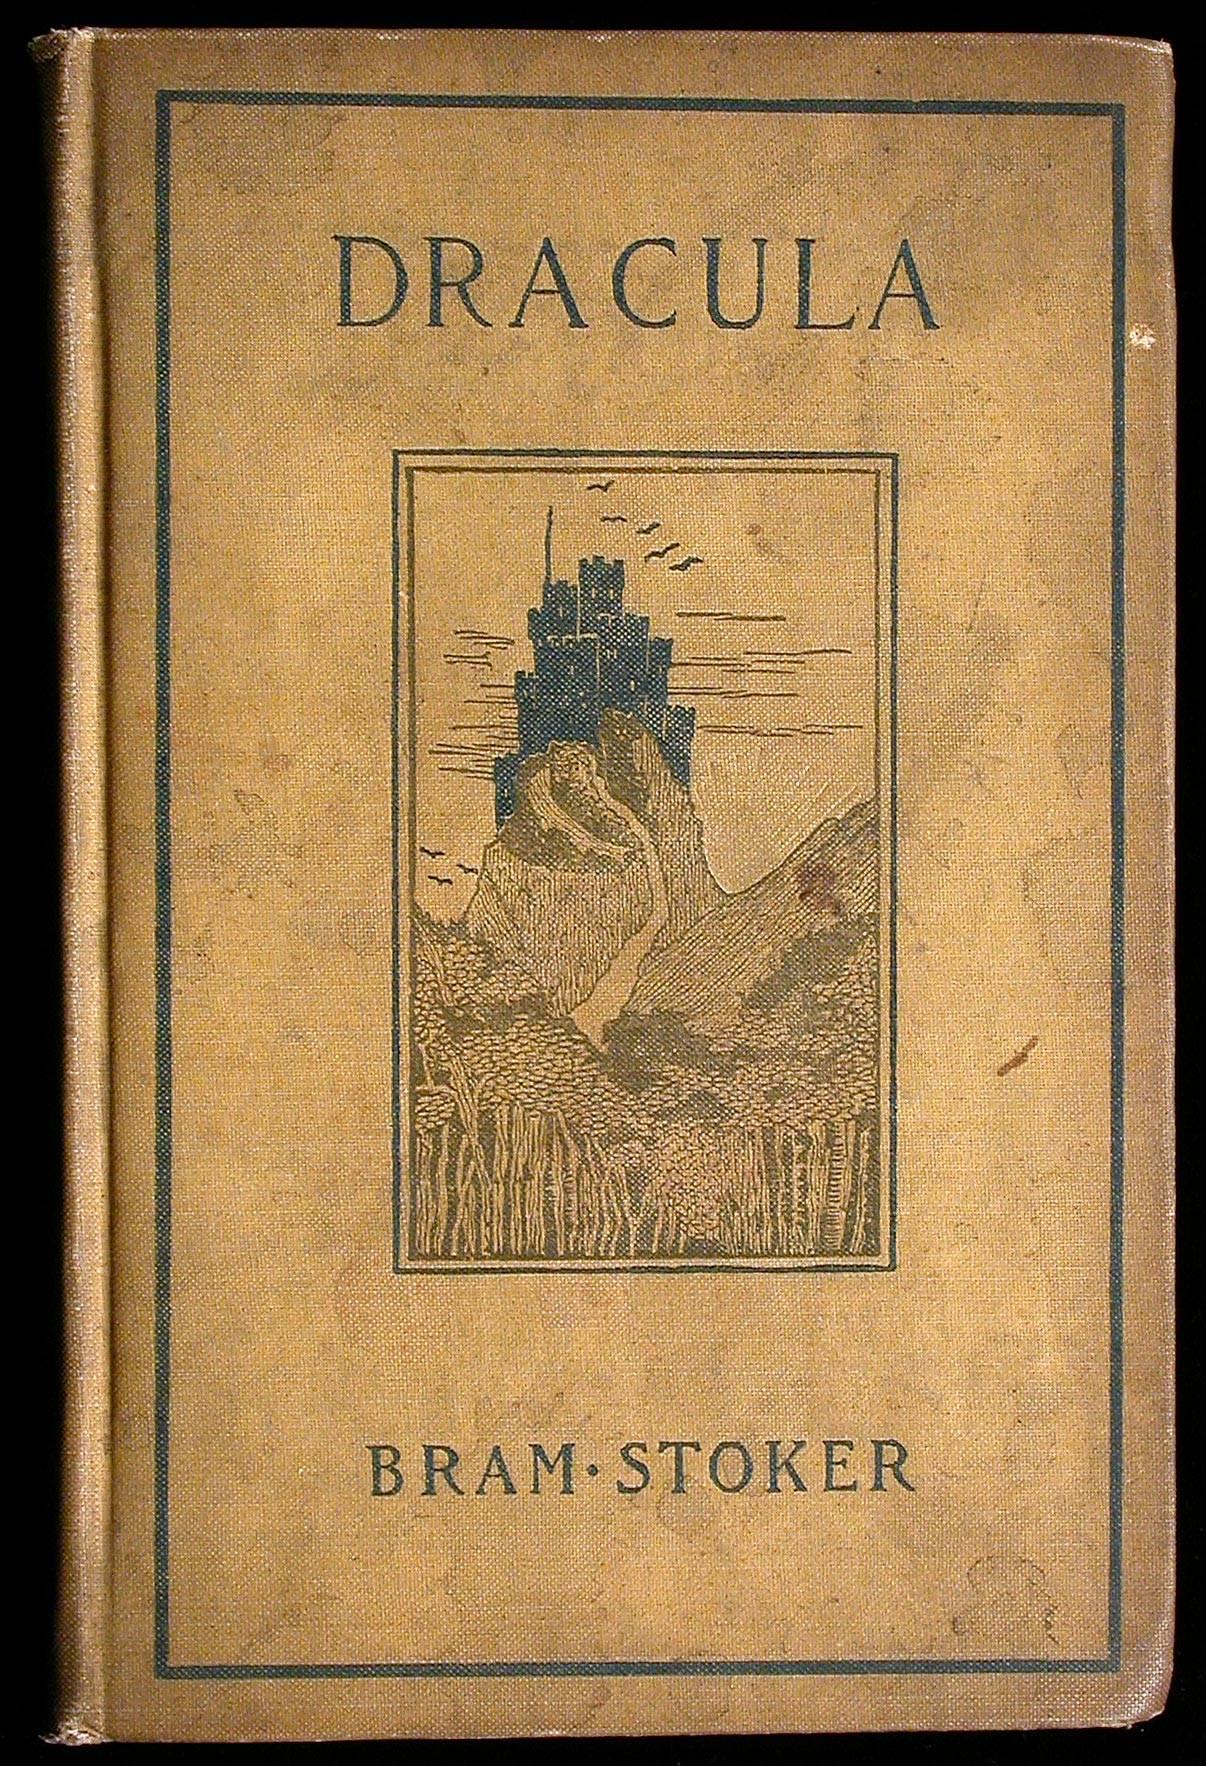 Брэм стокер дракула отзывы. Скорбь сатаны книга Брэм Стокер. First published 1897.